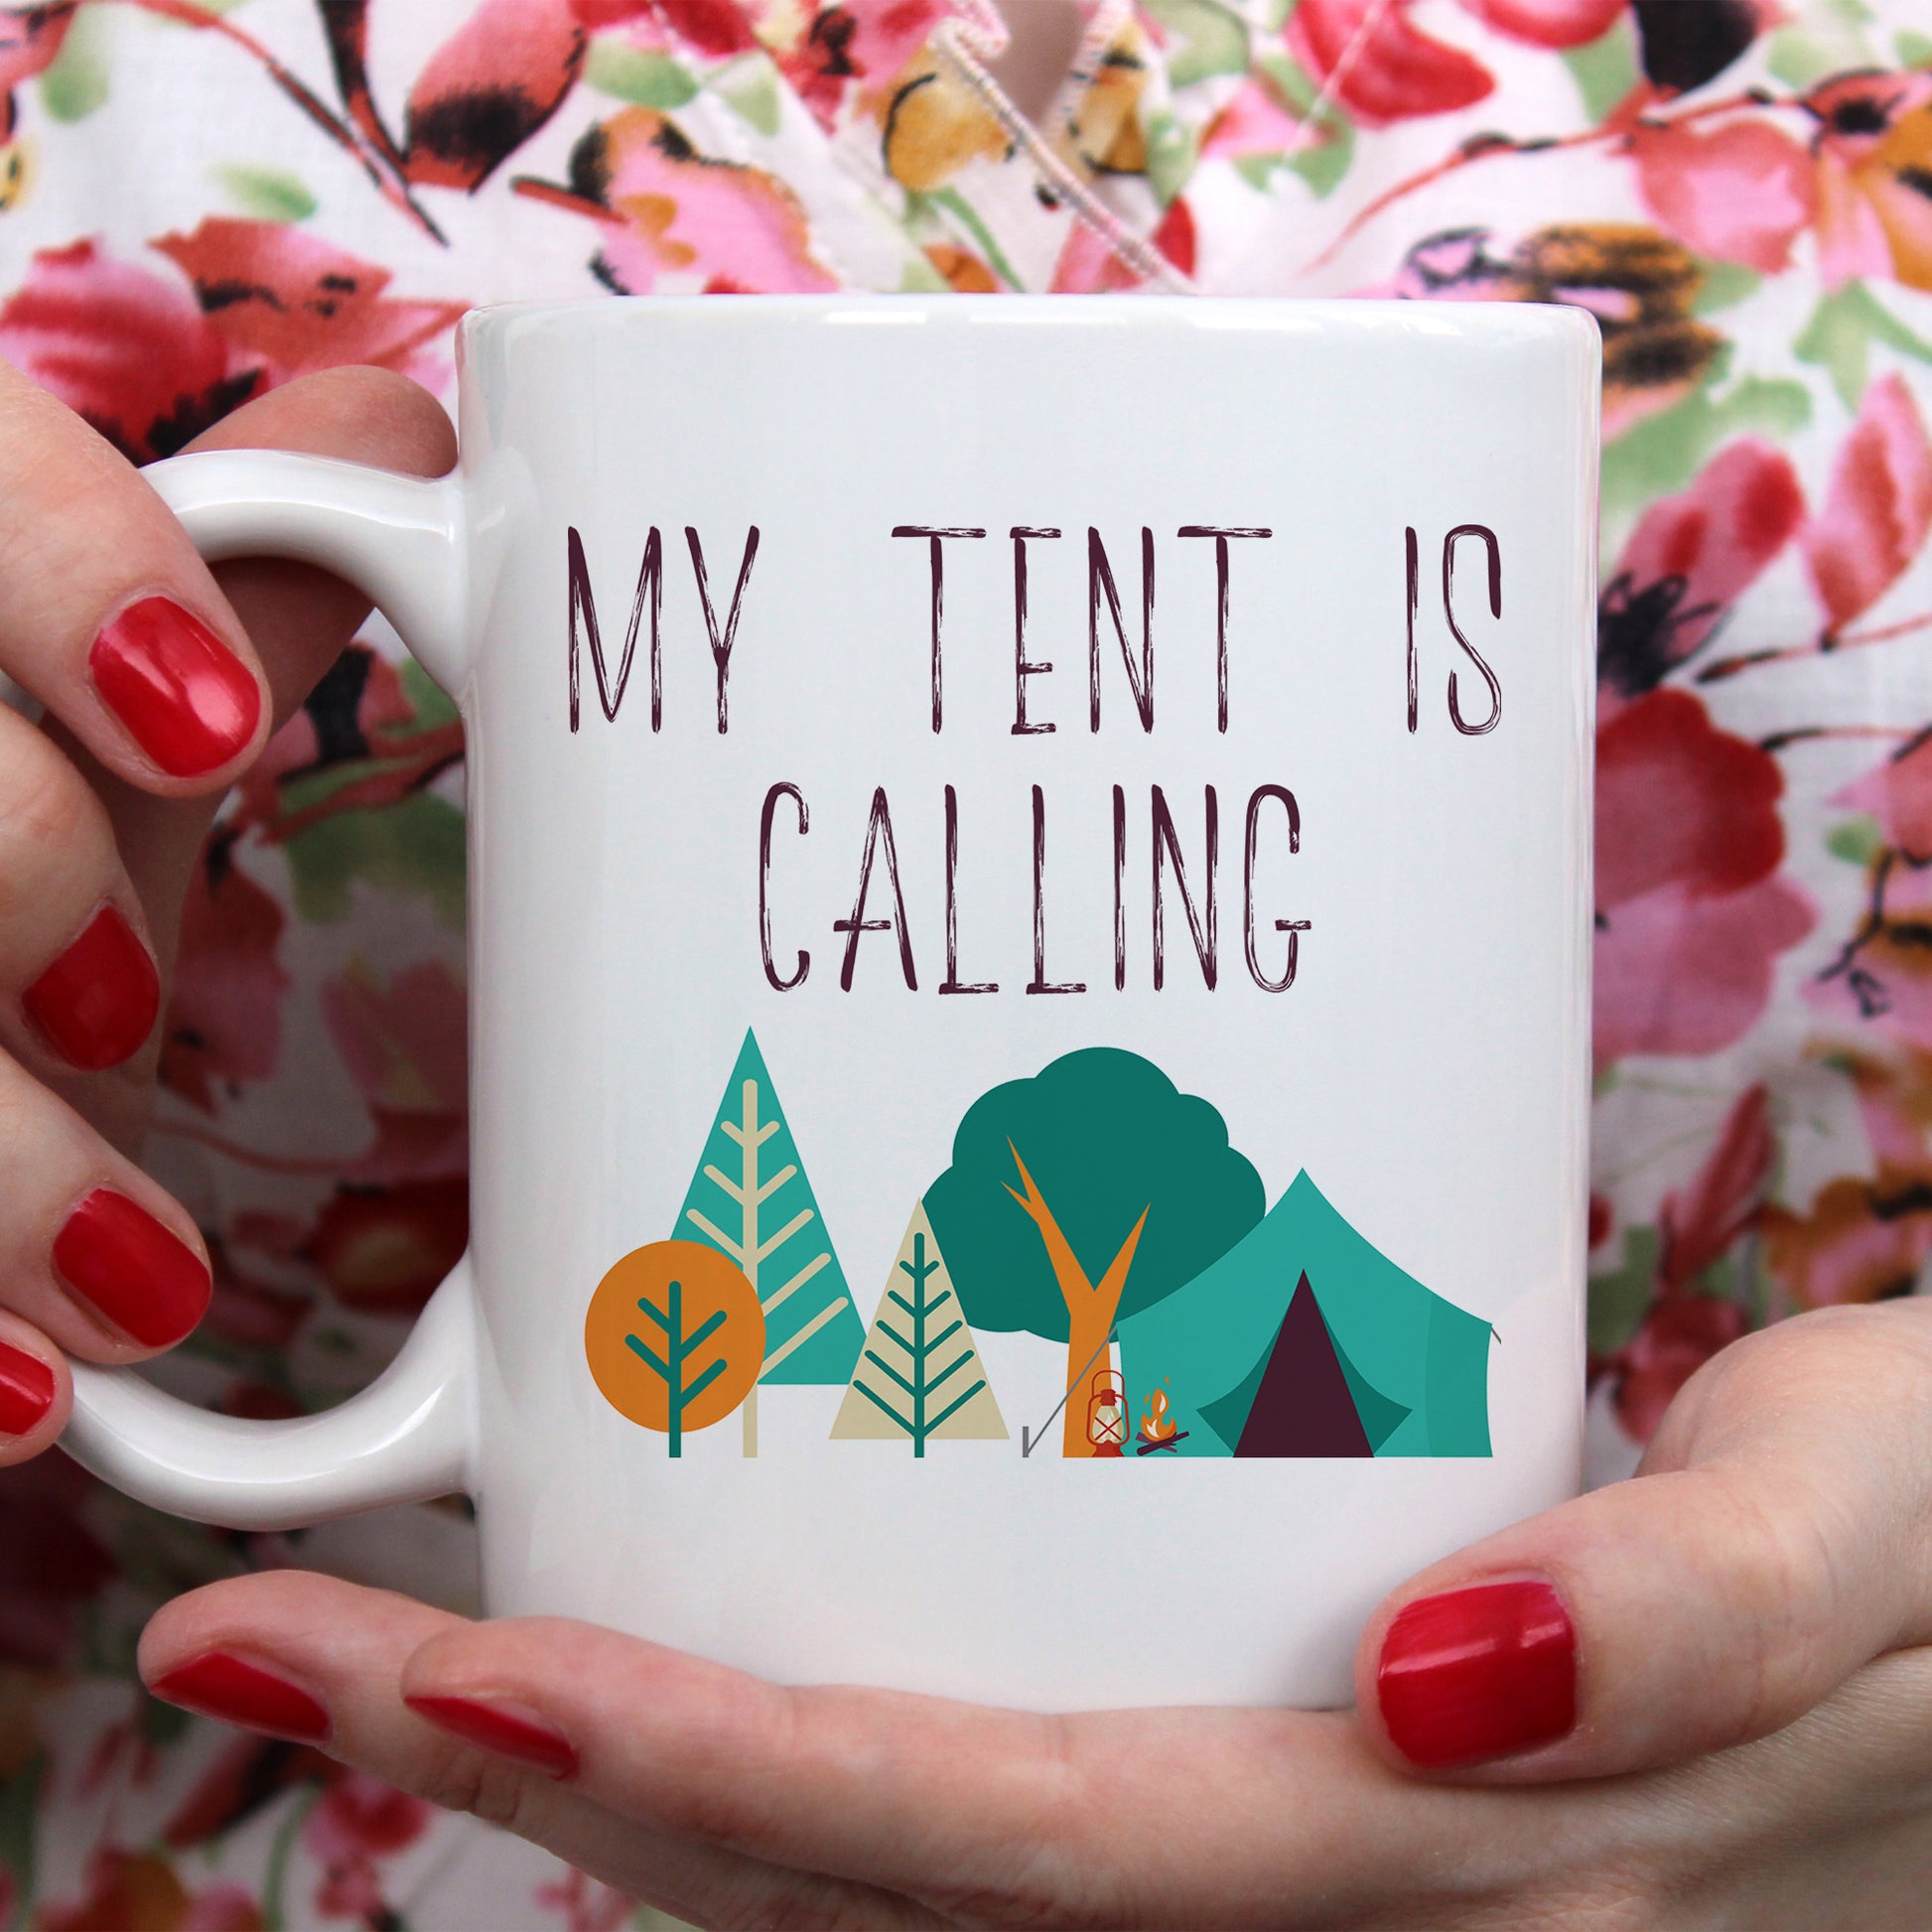 My tent is calling | Ceramic mug - Adnil Creations